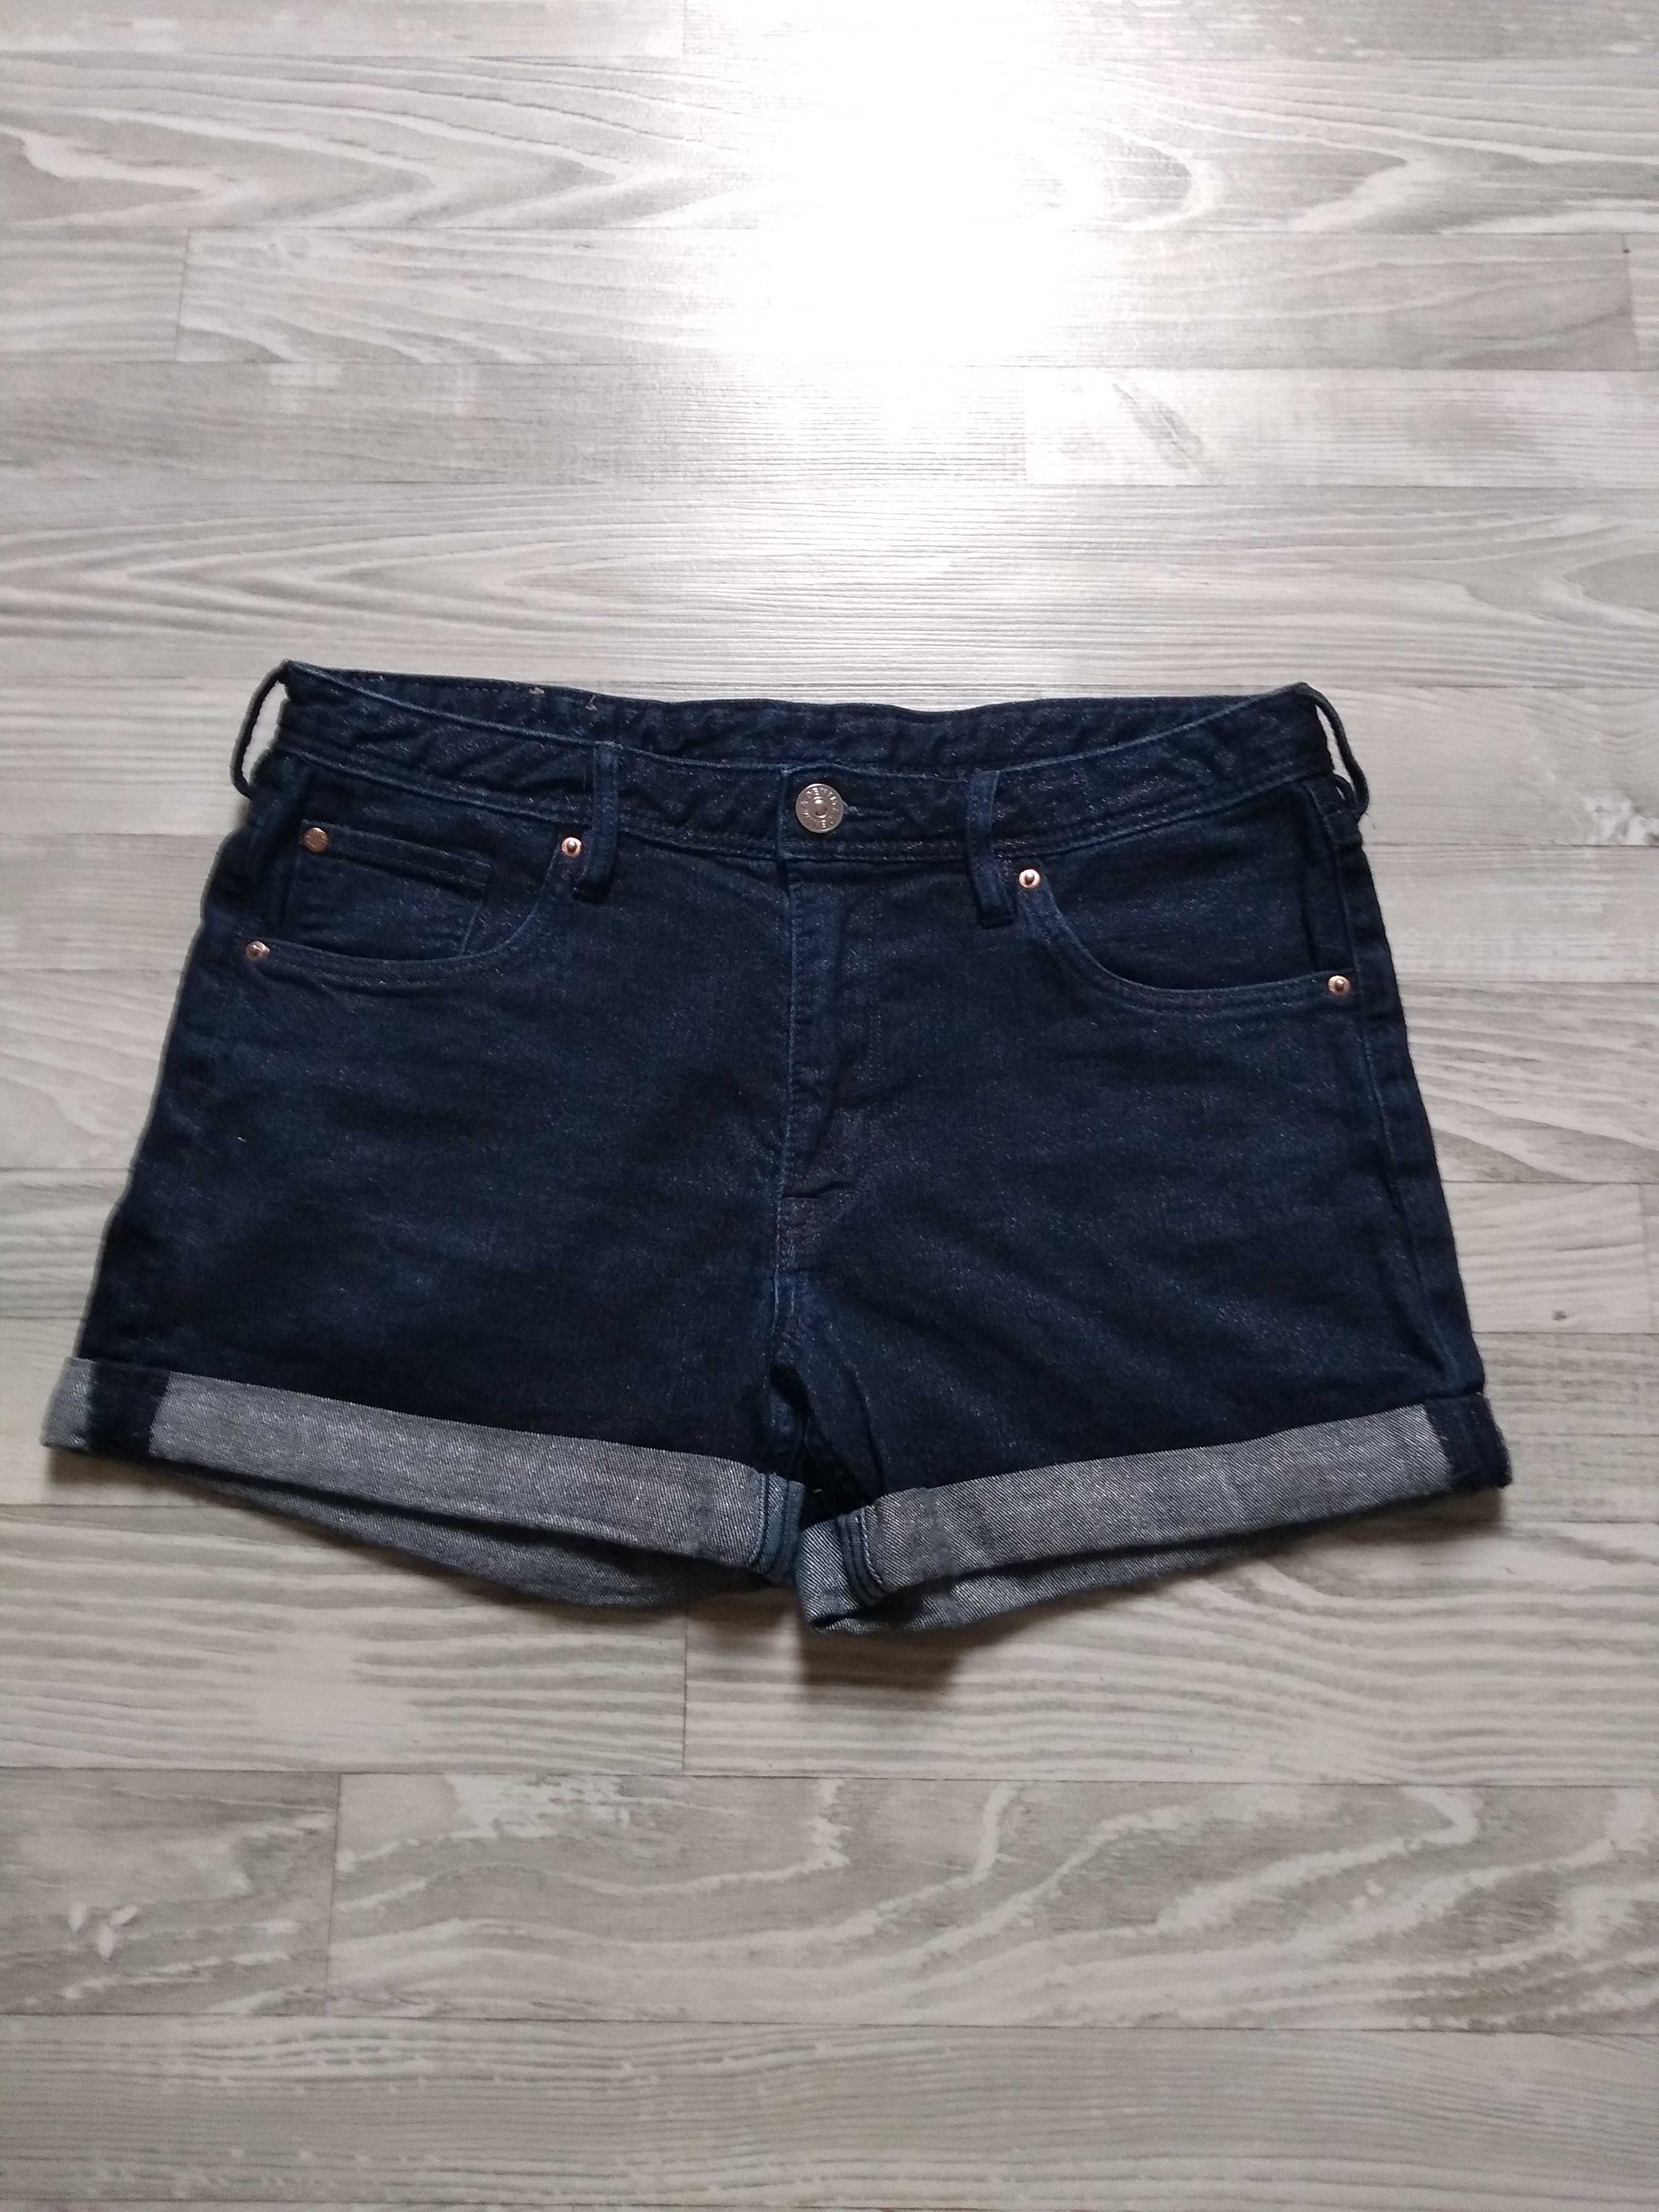 Spodenki miękki jeans XS/158 DENIM 12-13 lat (741)